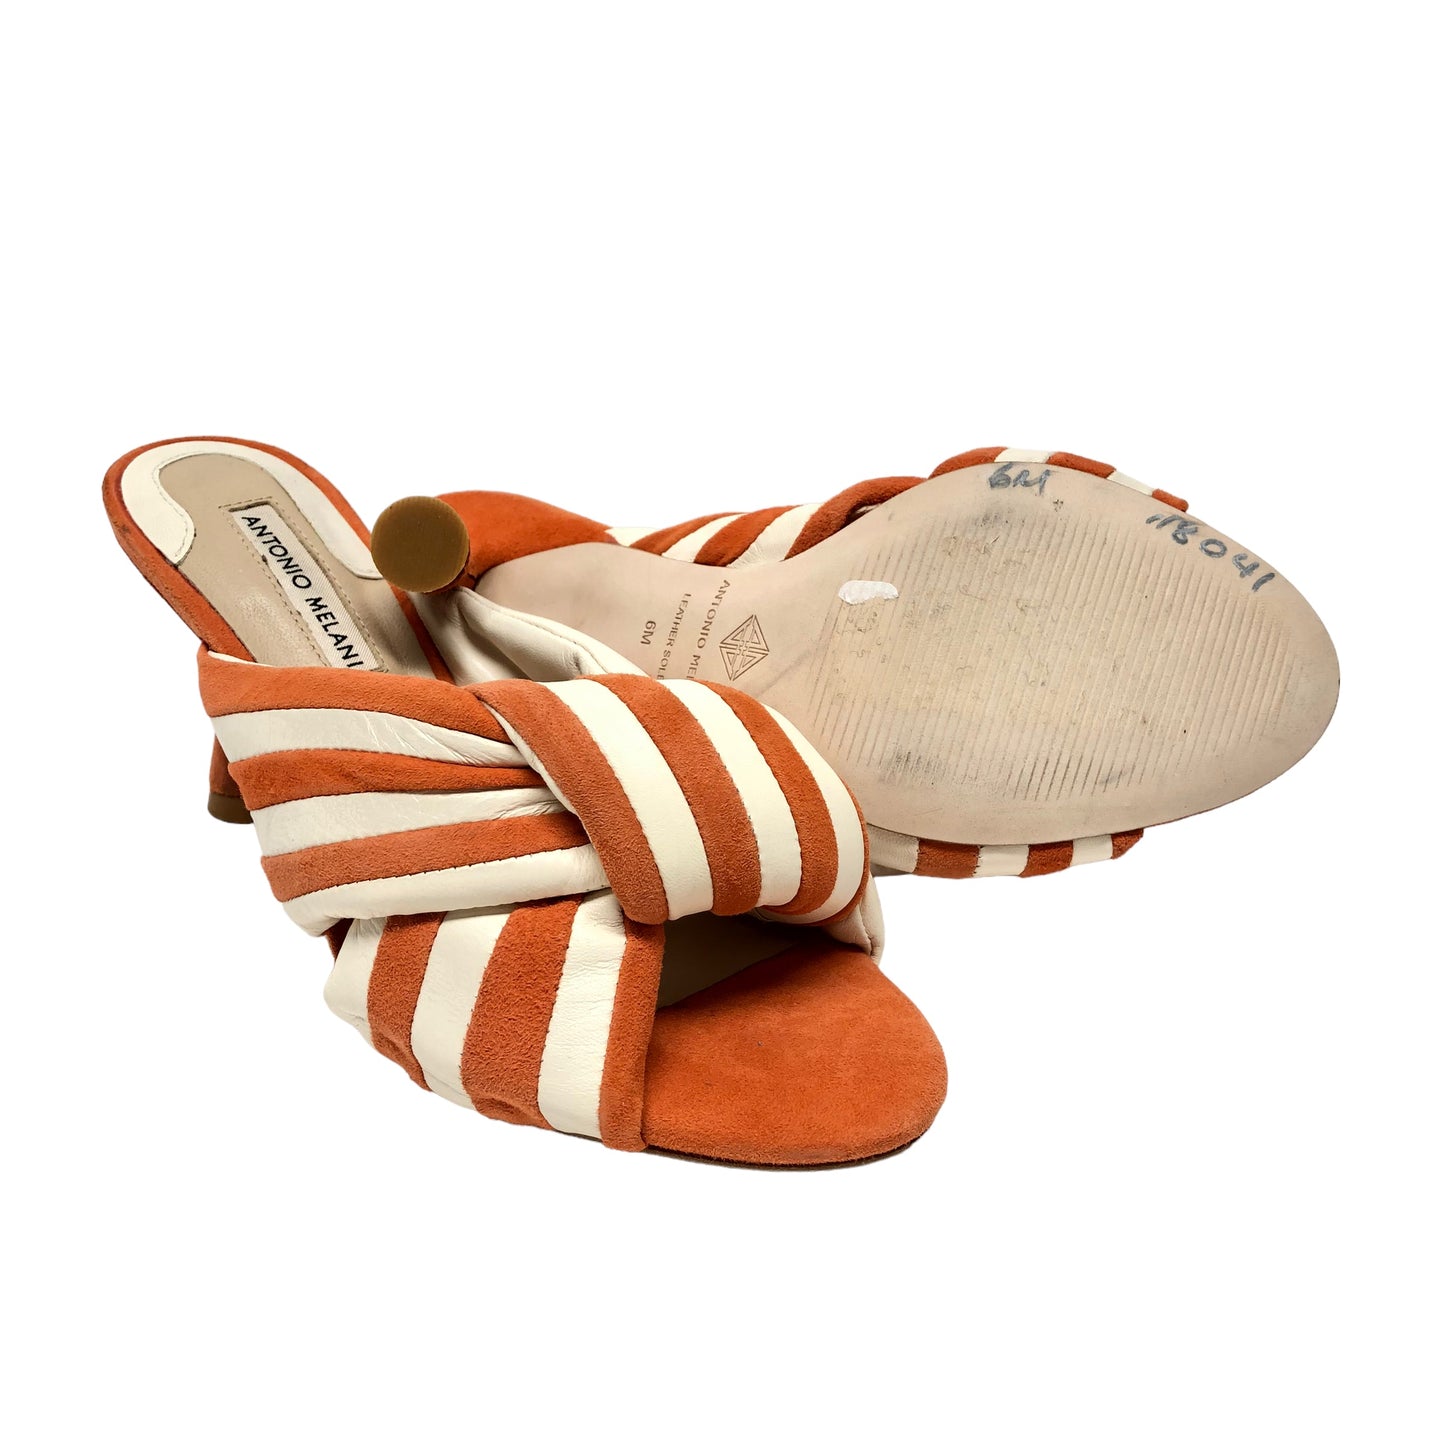 Sandals Heels Stiletto By Antonio Melani  Size: 6